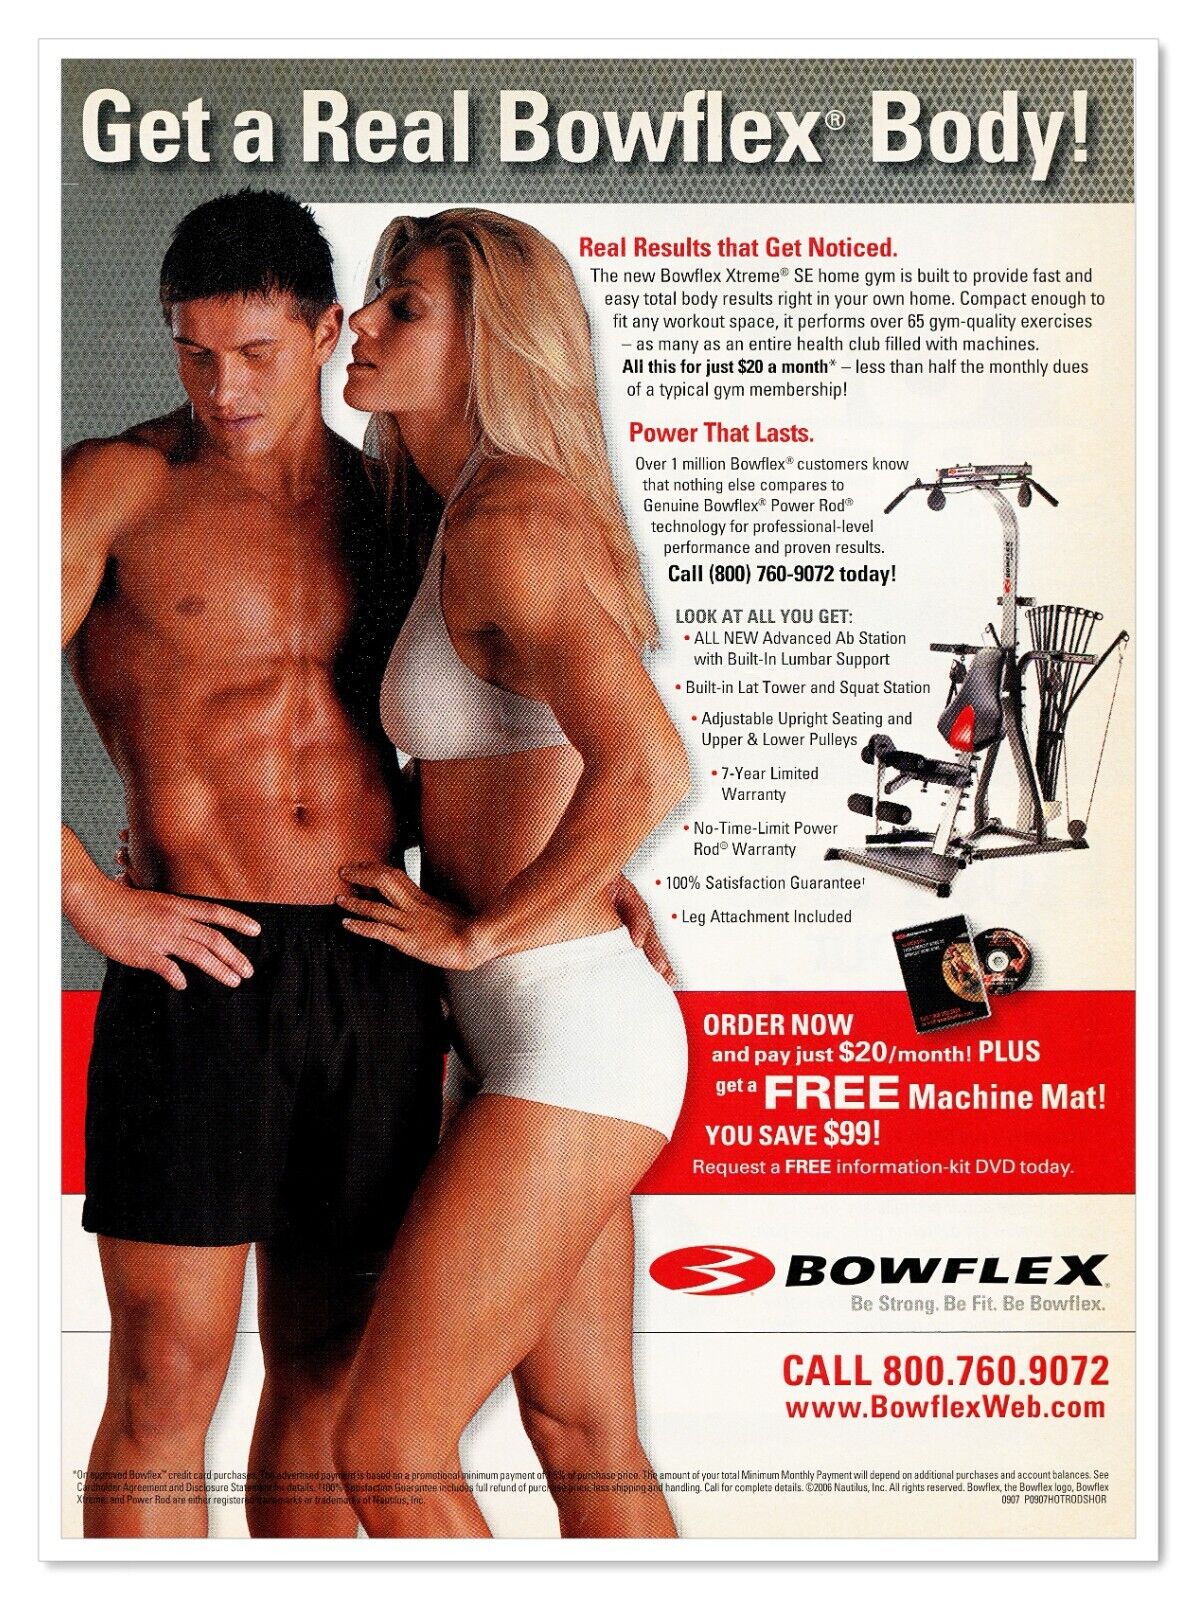 Bowflex Xtreme SE Home Gym Fit Couple 2007 Full-Page Print Magazine Ad